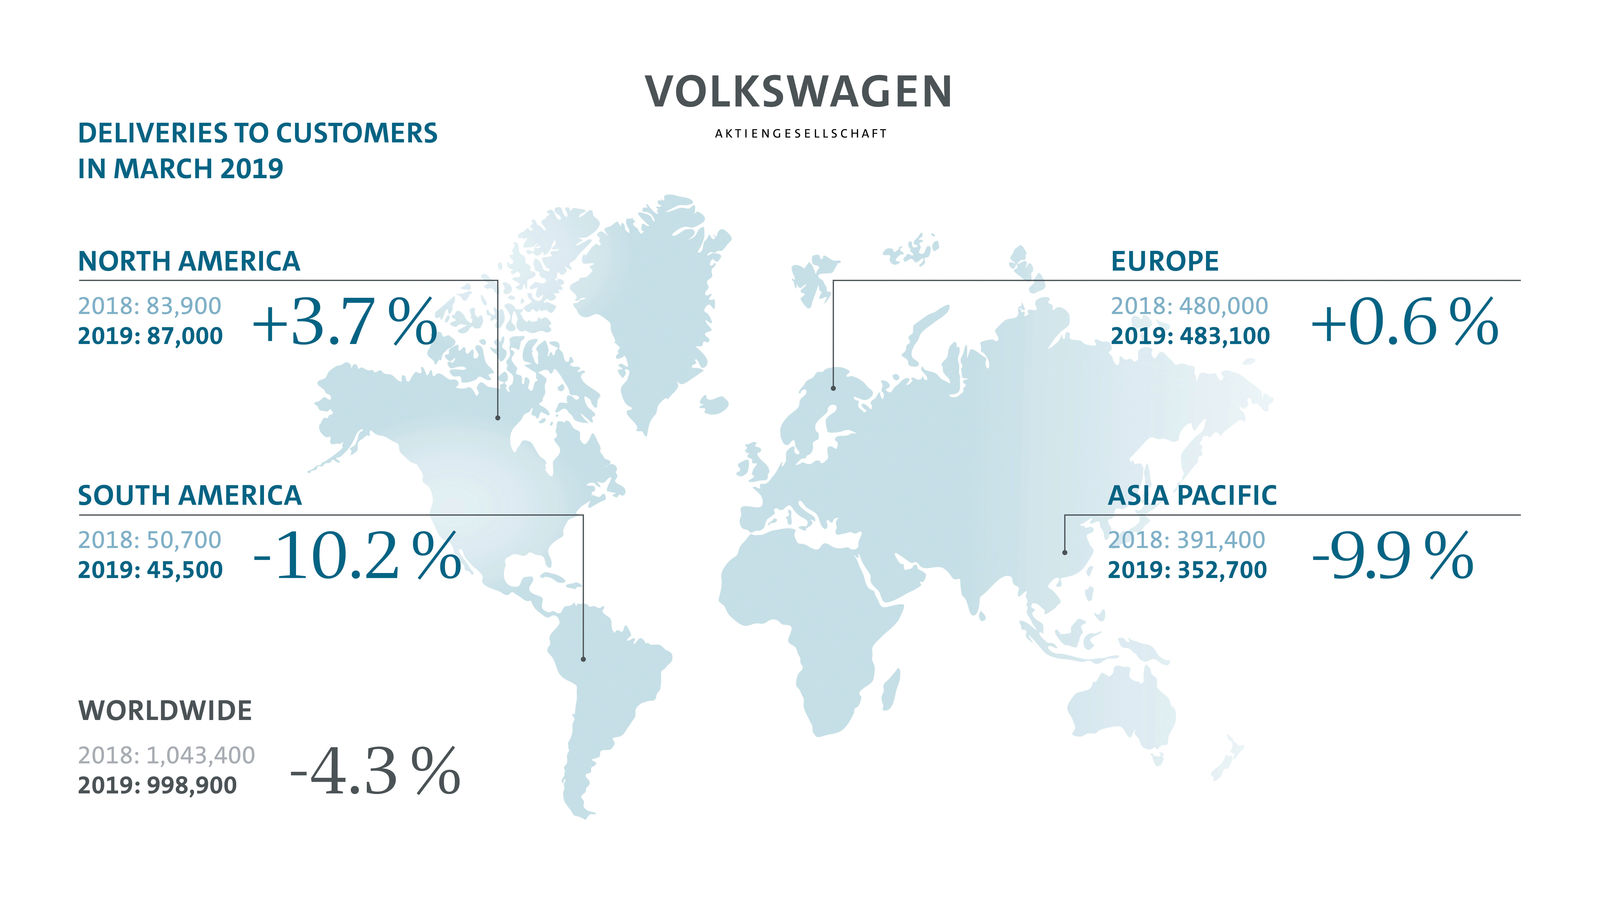 Volkswagen Group wins further market shares